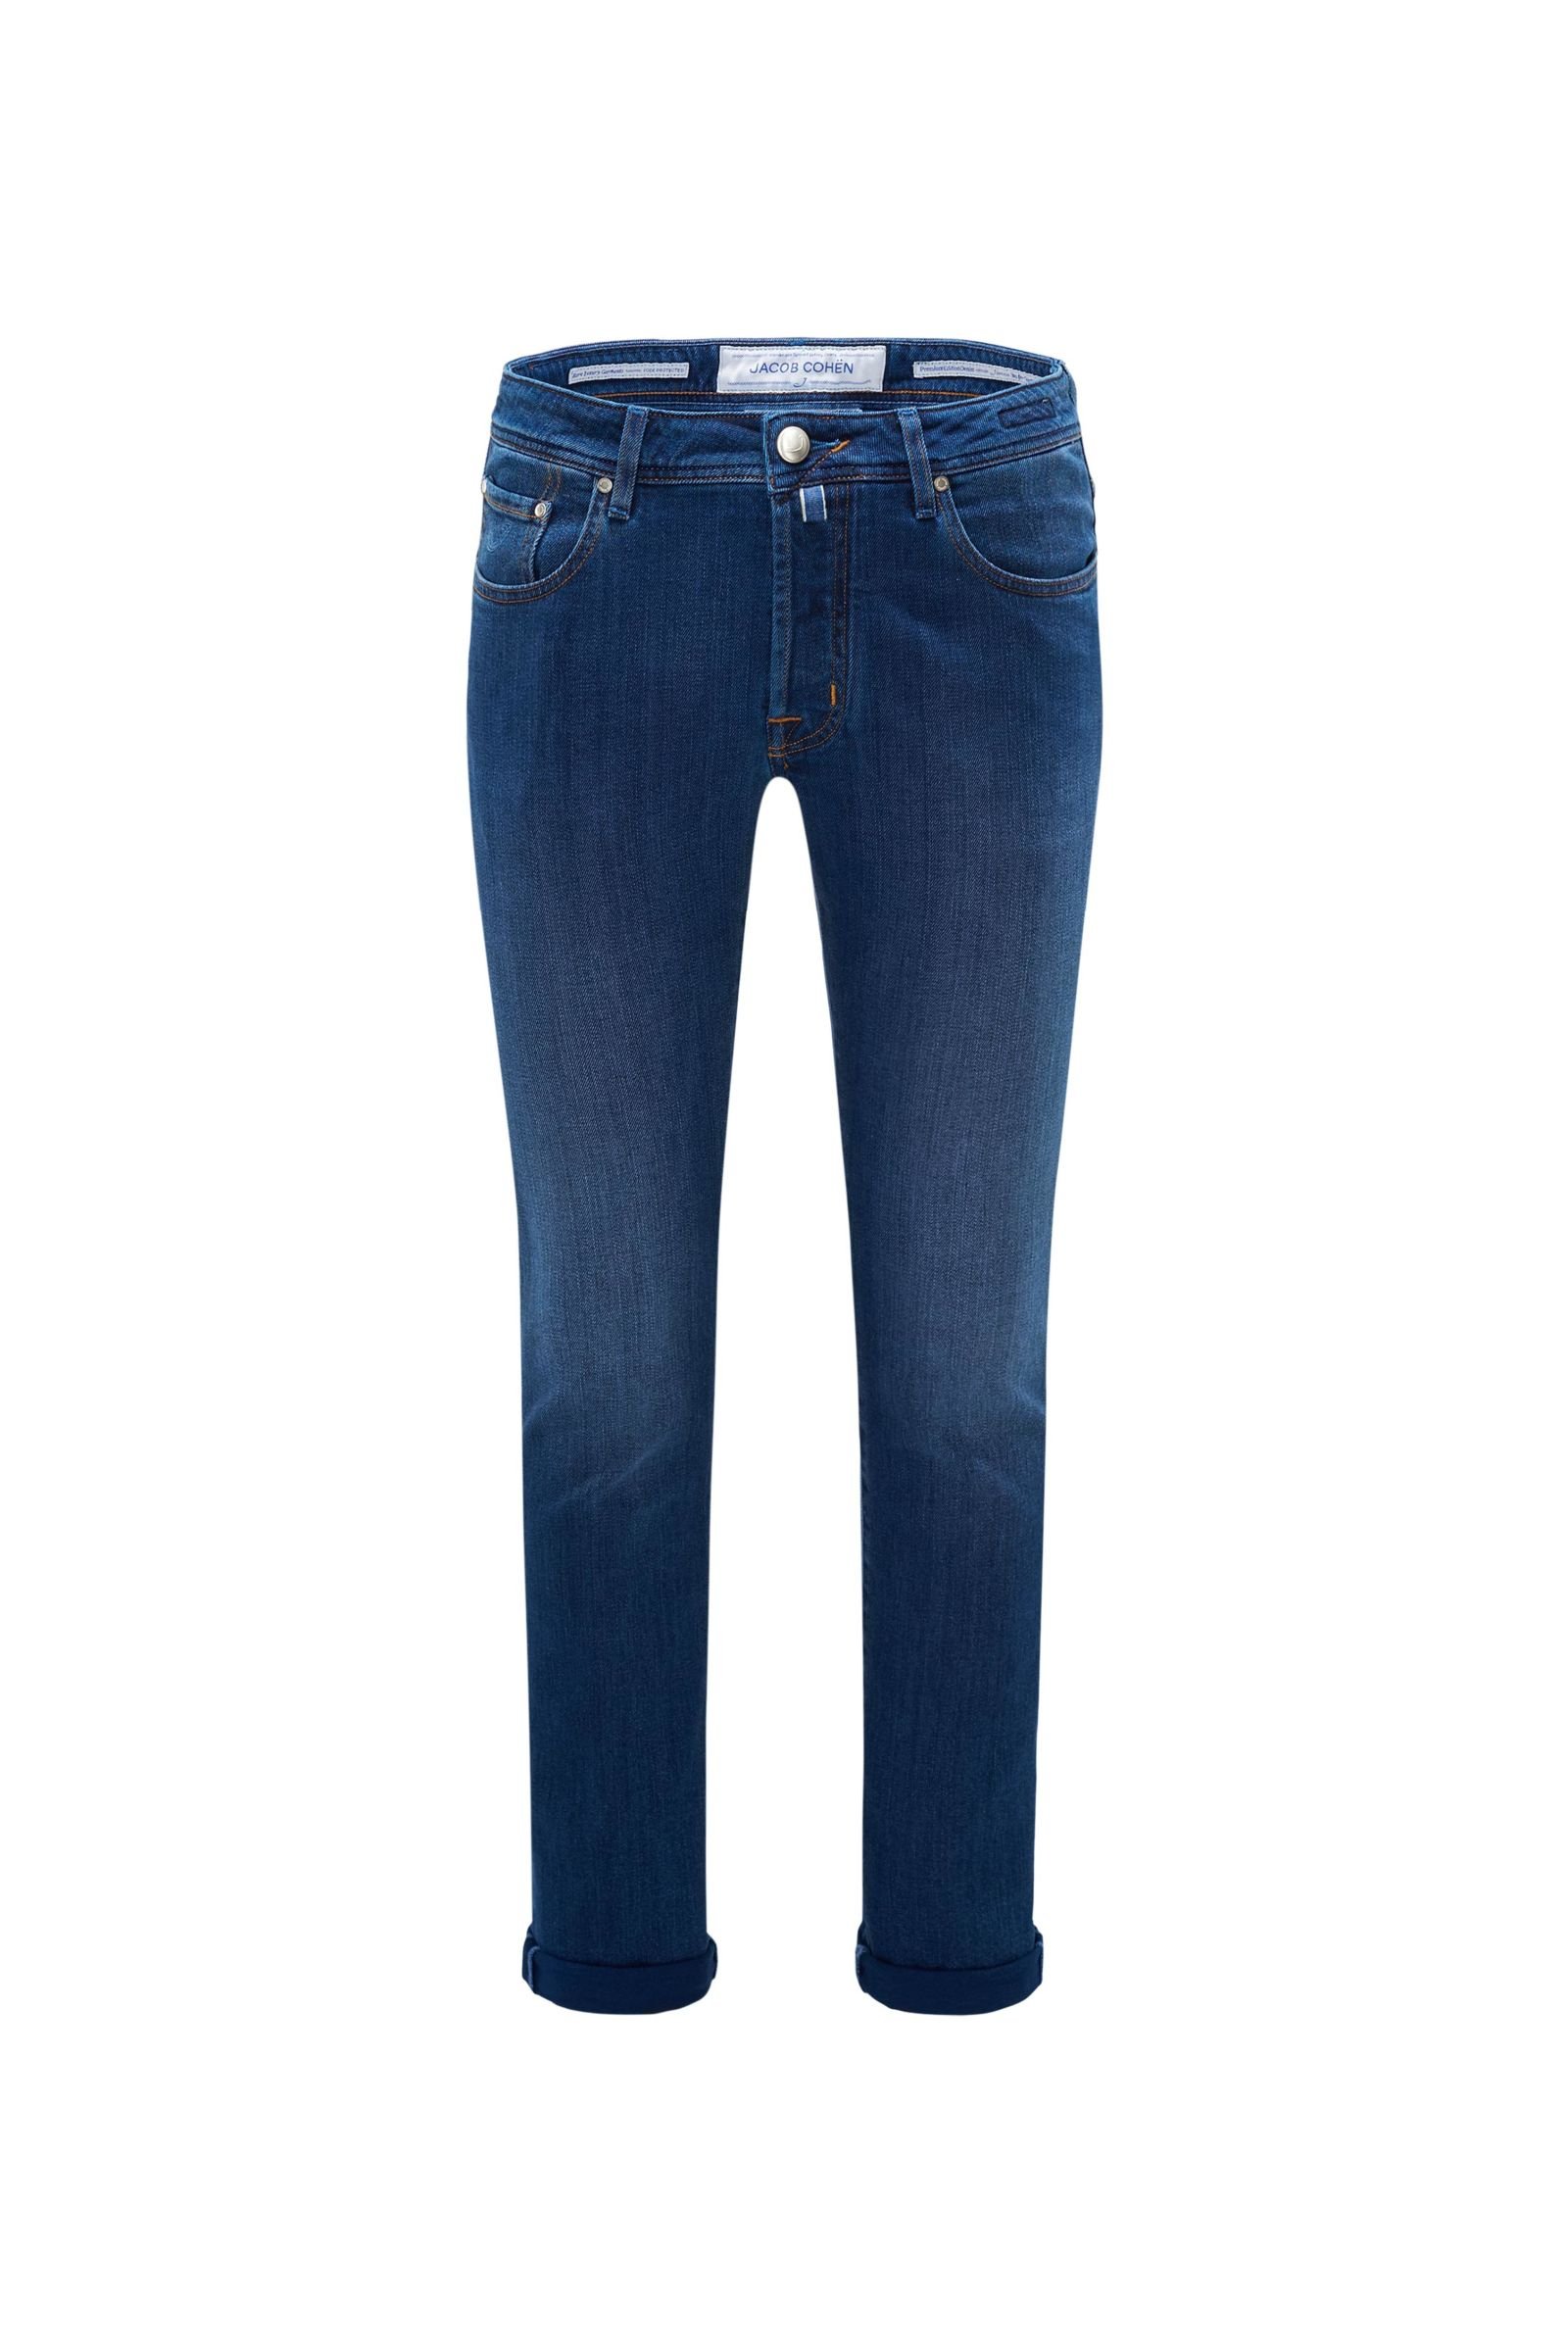 JACOB COHEN jeans 'J688 Comfort Slim Fit' dark blue | BRAUN Hamburg